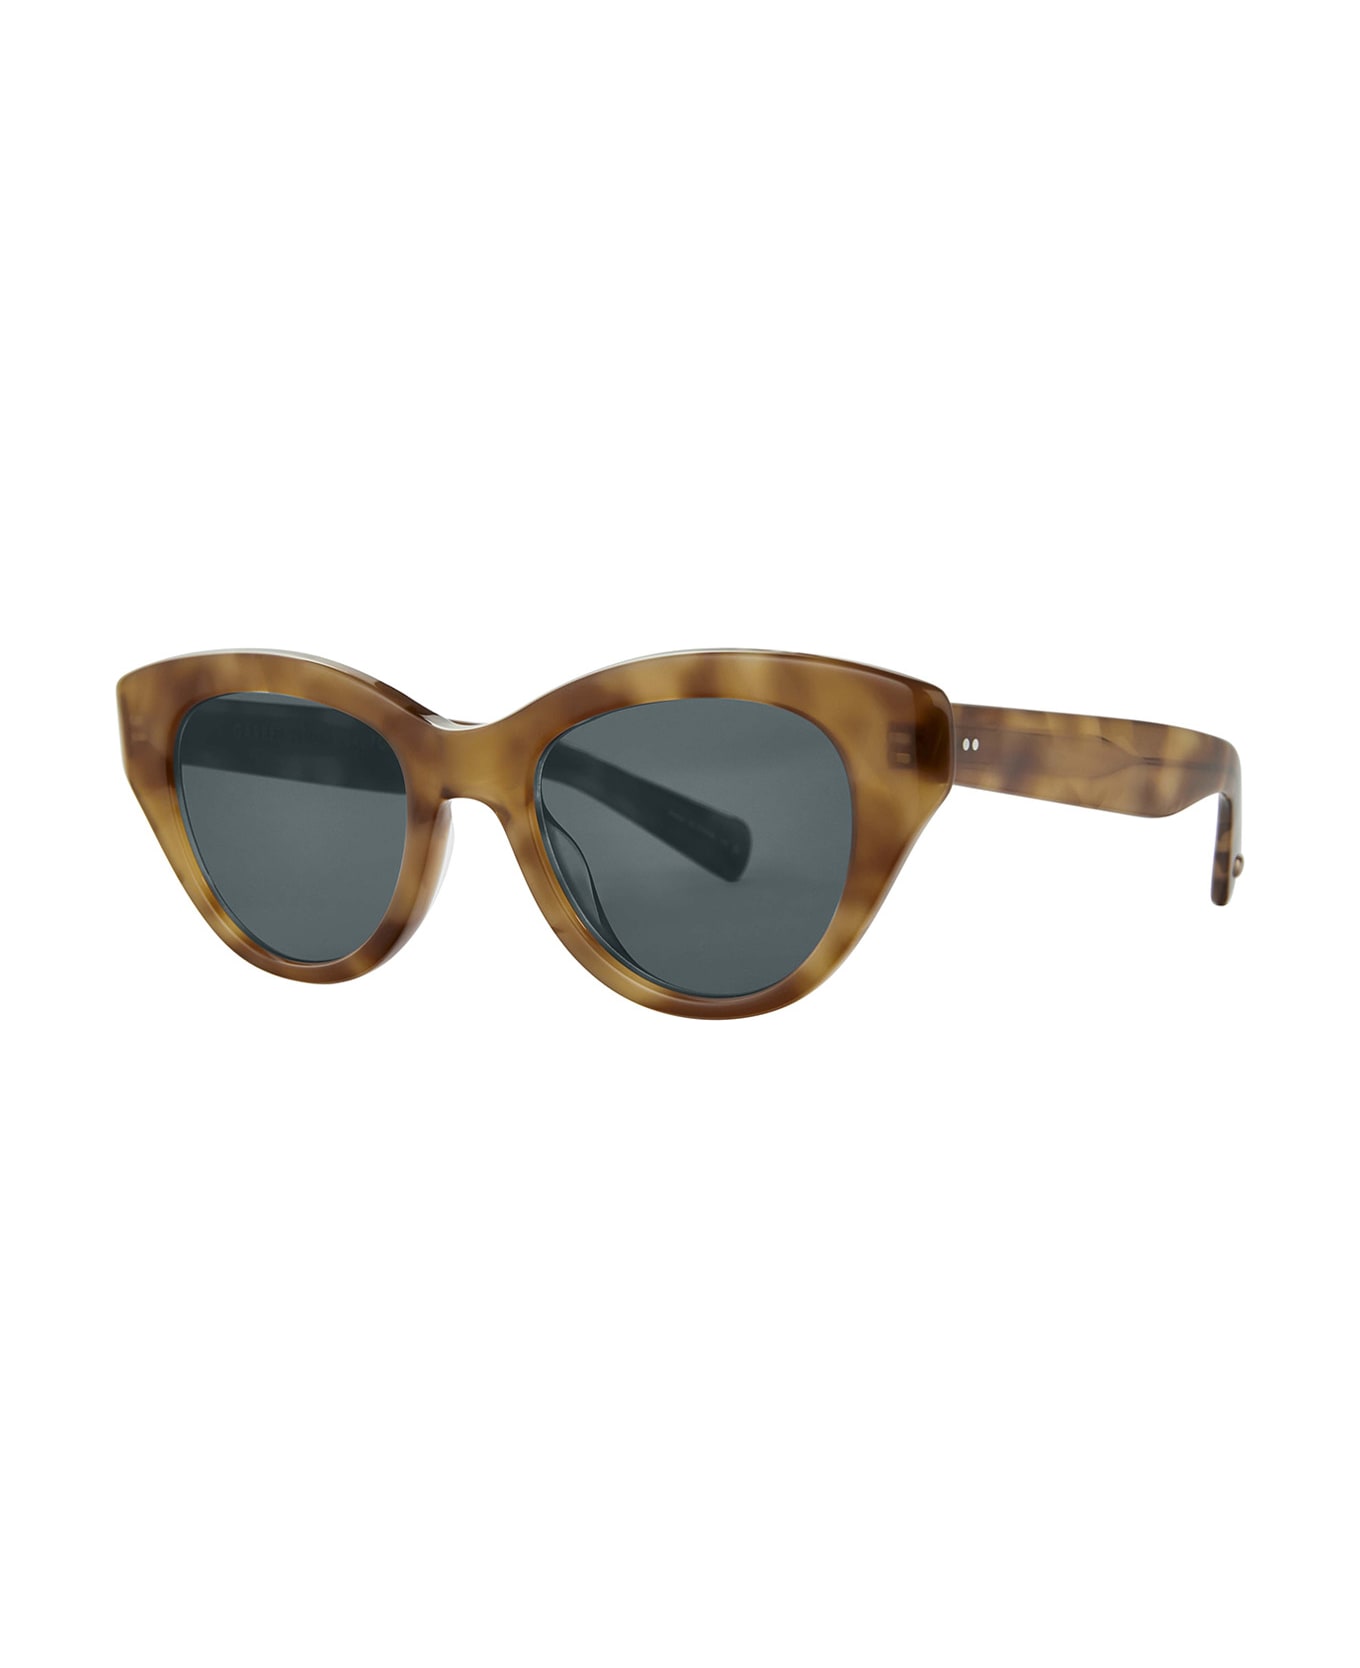 Garrett Leight Dottie Sun Ember Tortoise/semi-flat Blue Smoke Sunglasses - Ember Tortoise/Semi-Flat Blue Smoke